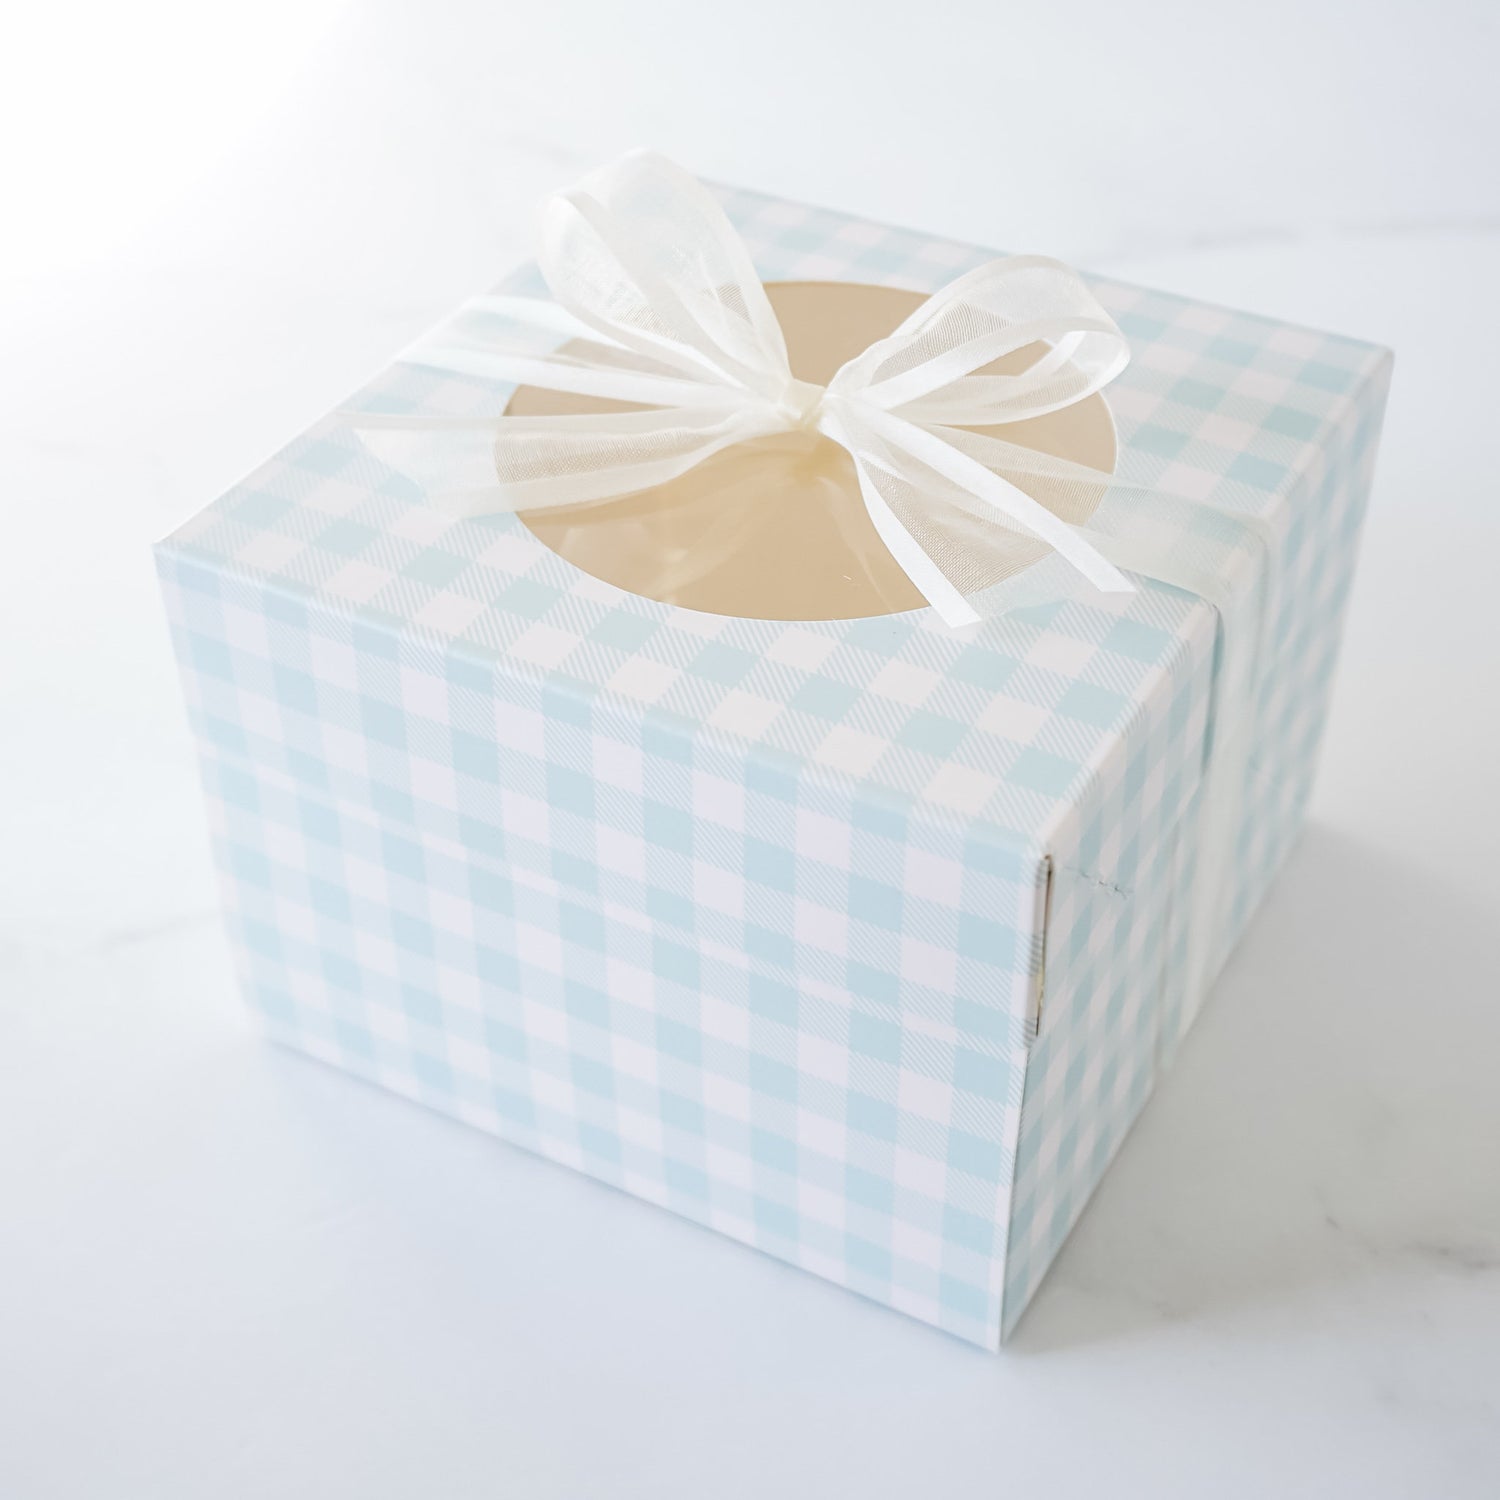 mini cake box with window in blue/white